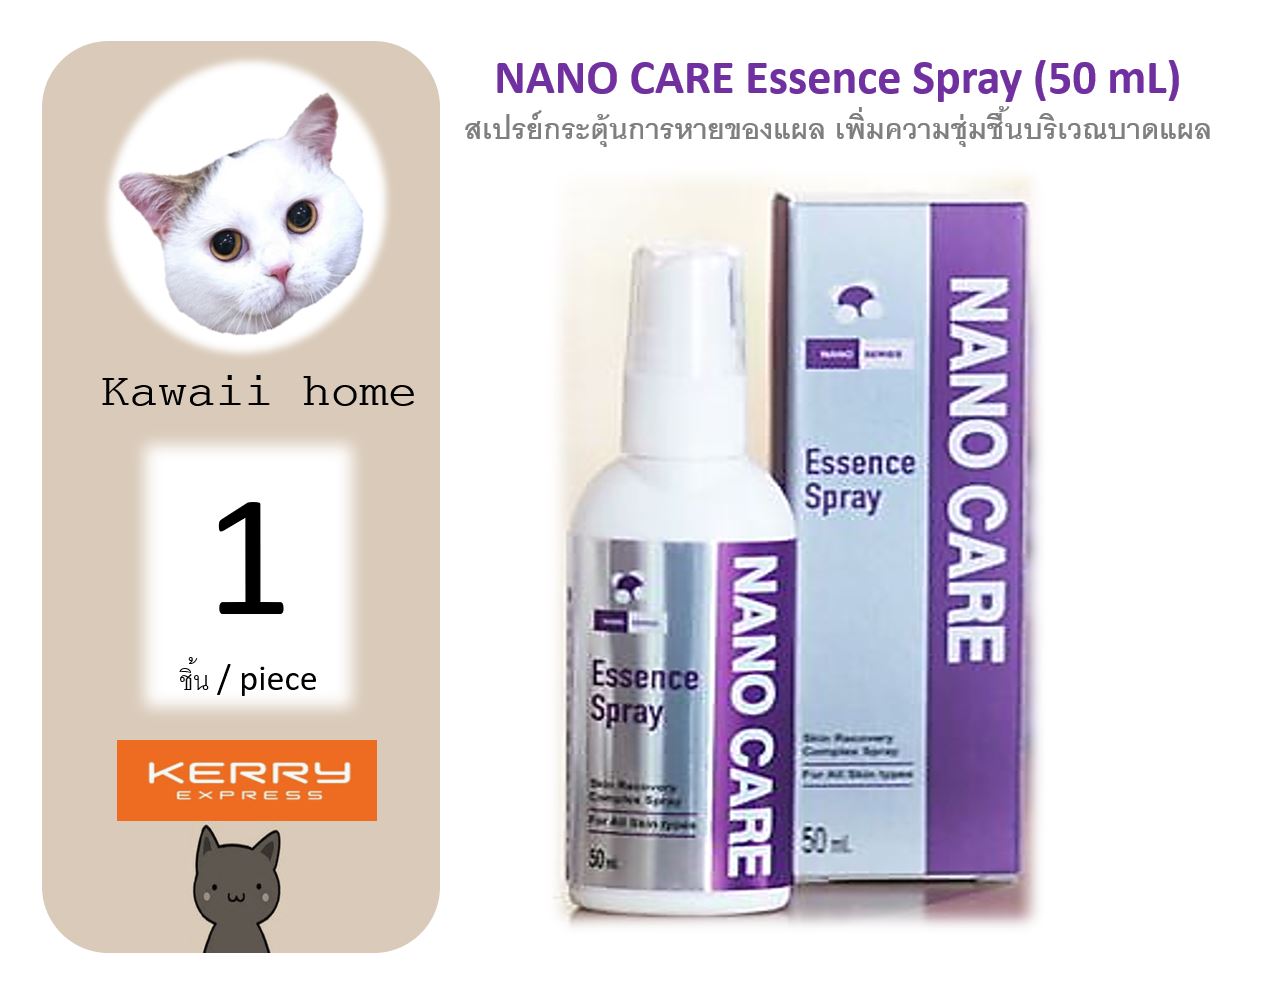 (M03) NANO Spray นาโน สเปรย์ ขนาด 50 mL NANO Care Essence Spray สเปรย์พ่นแผล กระตุ้นการหายของแผล เพิ่มความชุ่มชื้นบริเวณบาดแผล (จำนวน 1 ขวด) หมดอายุ 2021